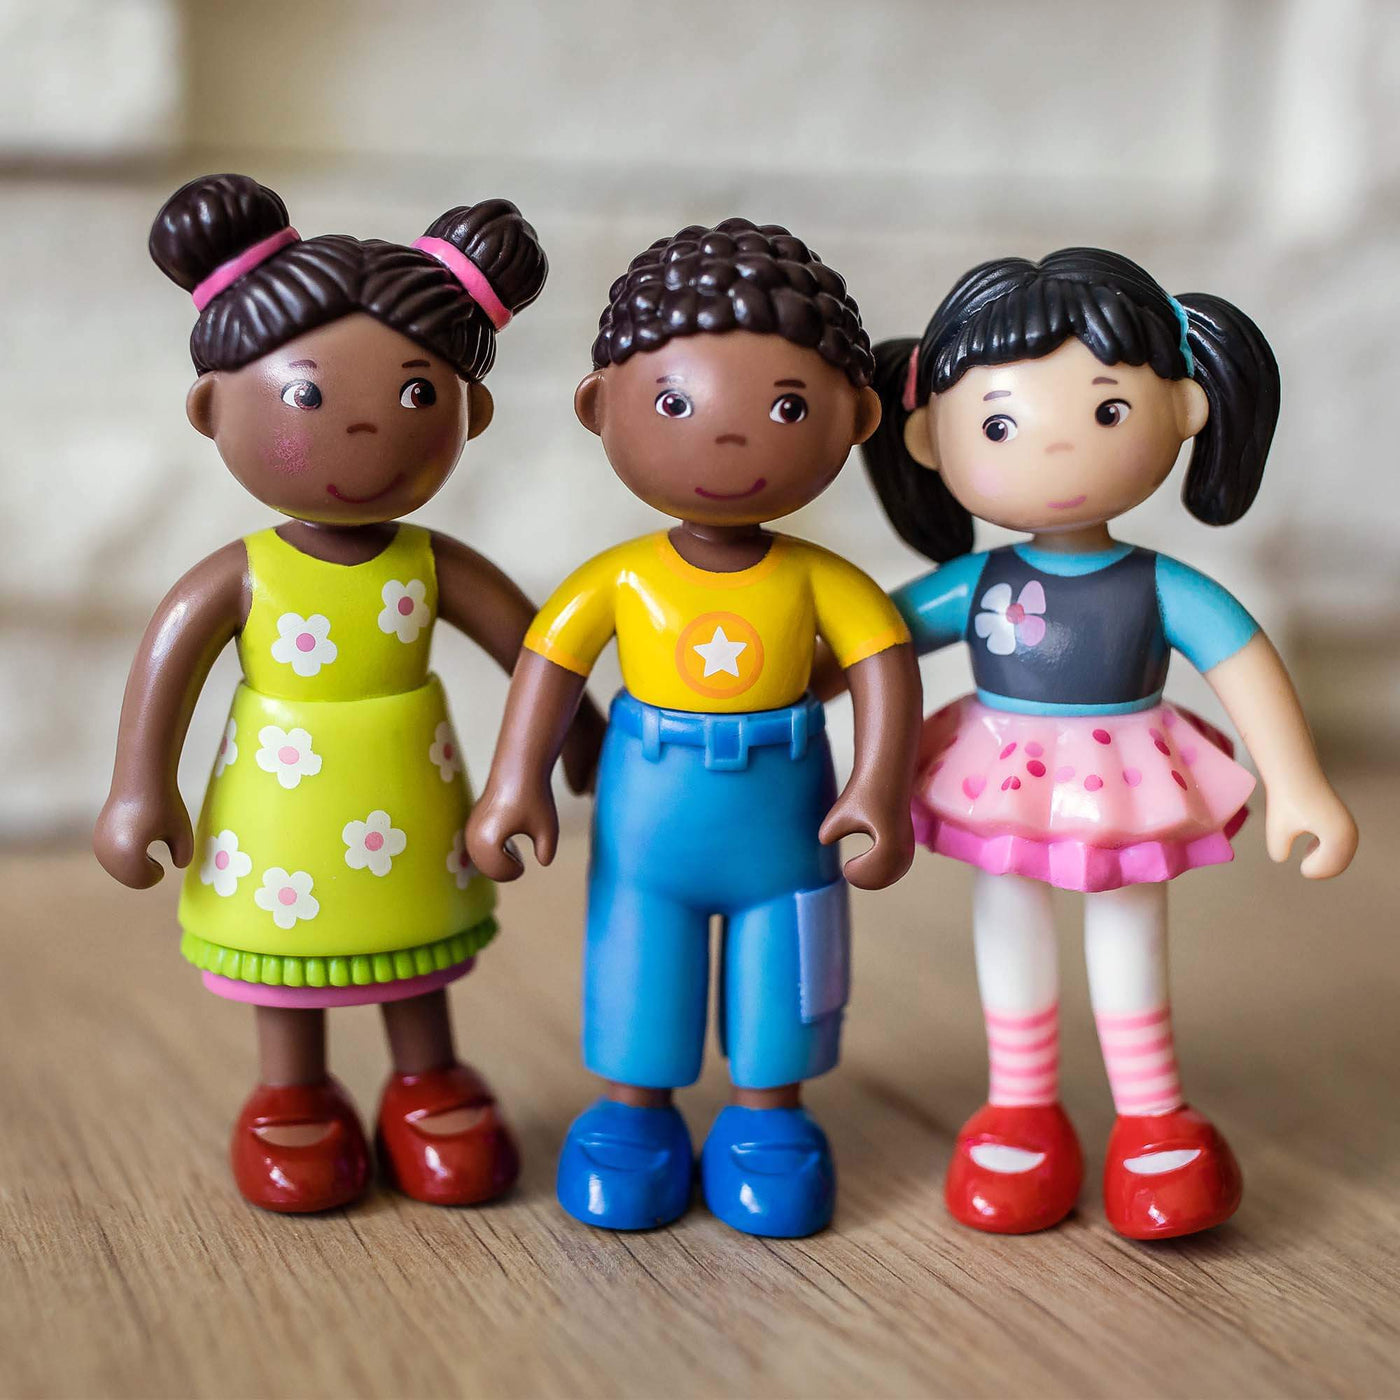 Little Friends Doll Favorites Bundle - HABA USA